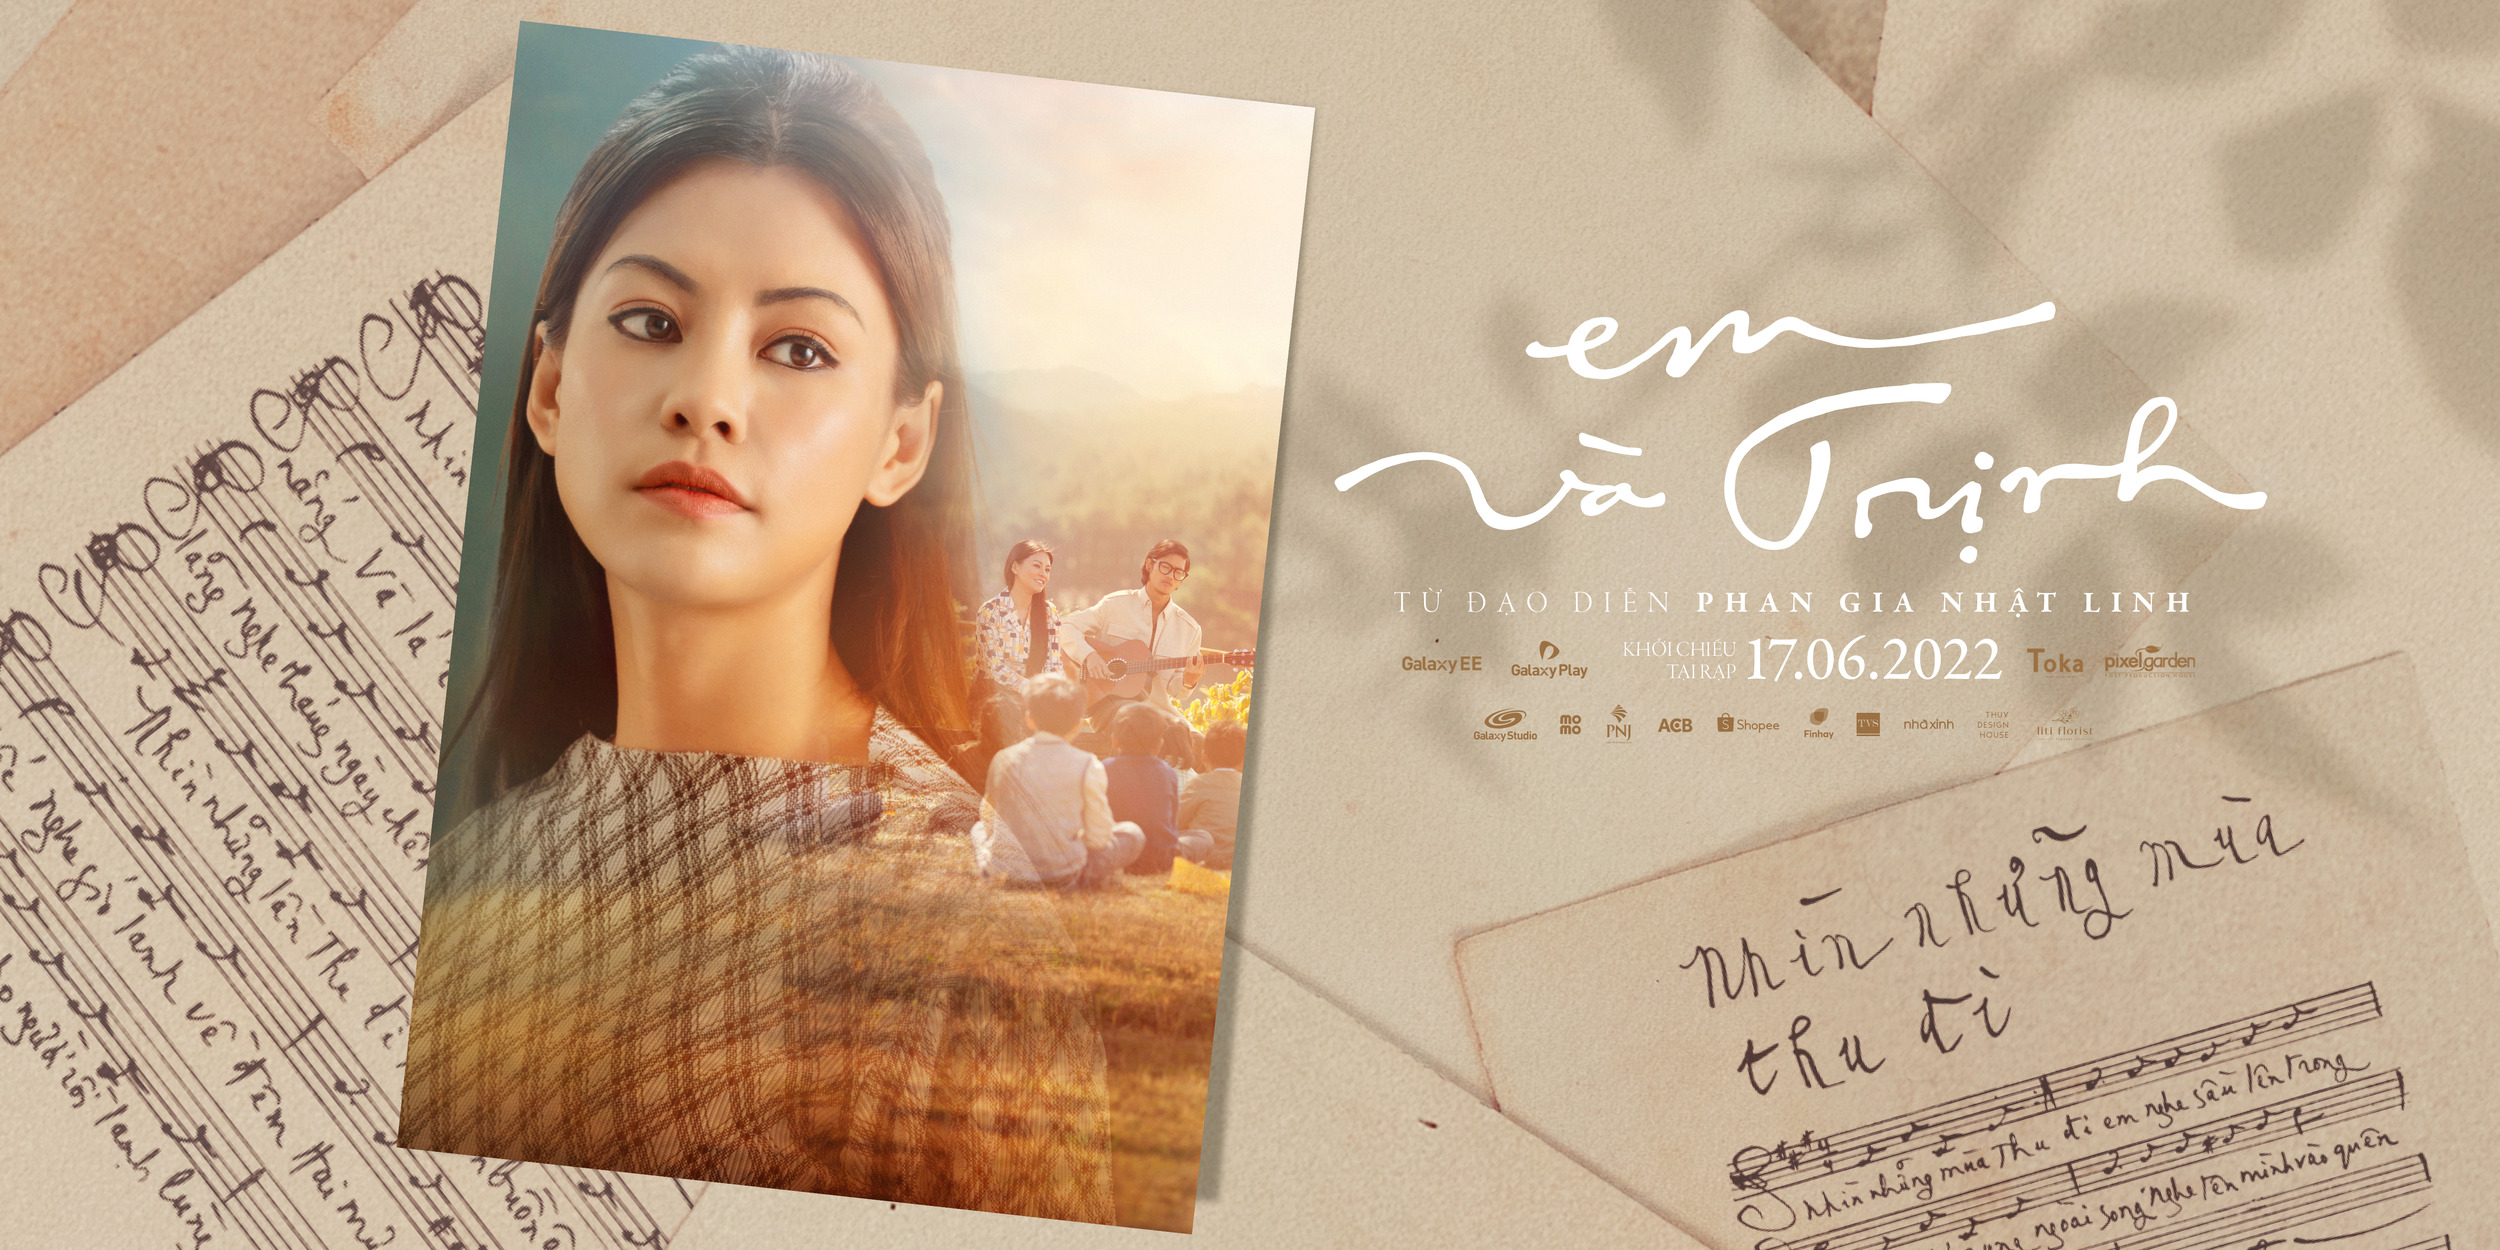 Mega Sized Movie Poster Image for Em Va Trinh (#14 of 19)